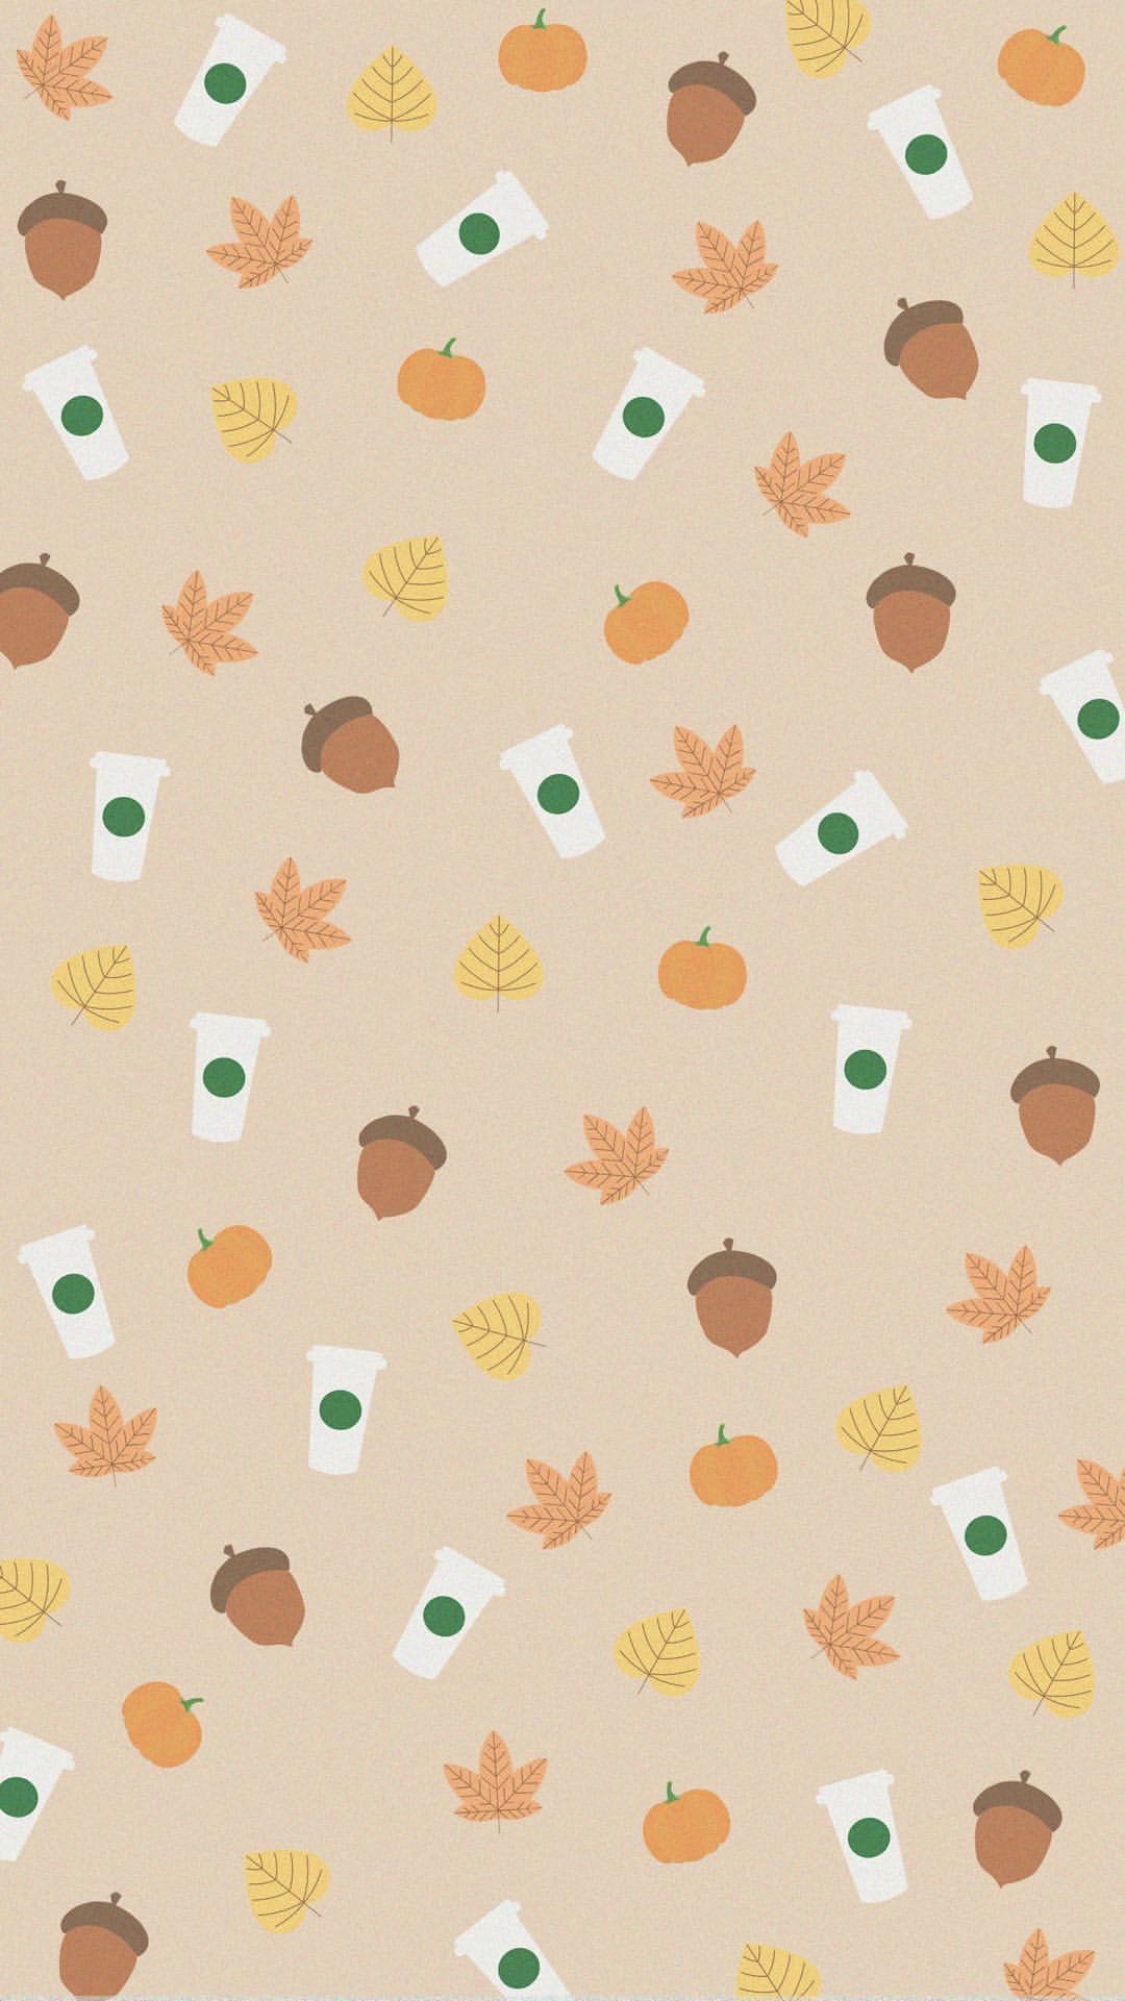 Starbucks background fall autumn wallpaper, #autumn #background #cellphonebackg.#autumn #bac. iPhone wallpaper fall, Halloween wallpaper iphone, Fall wallpaper